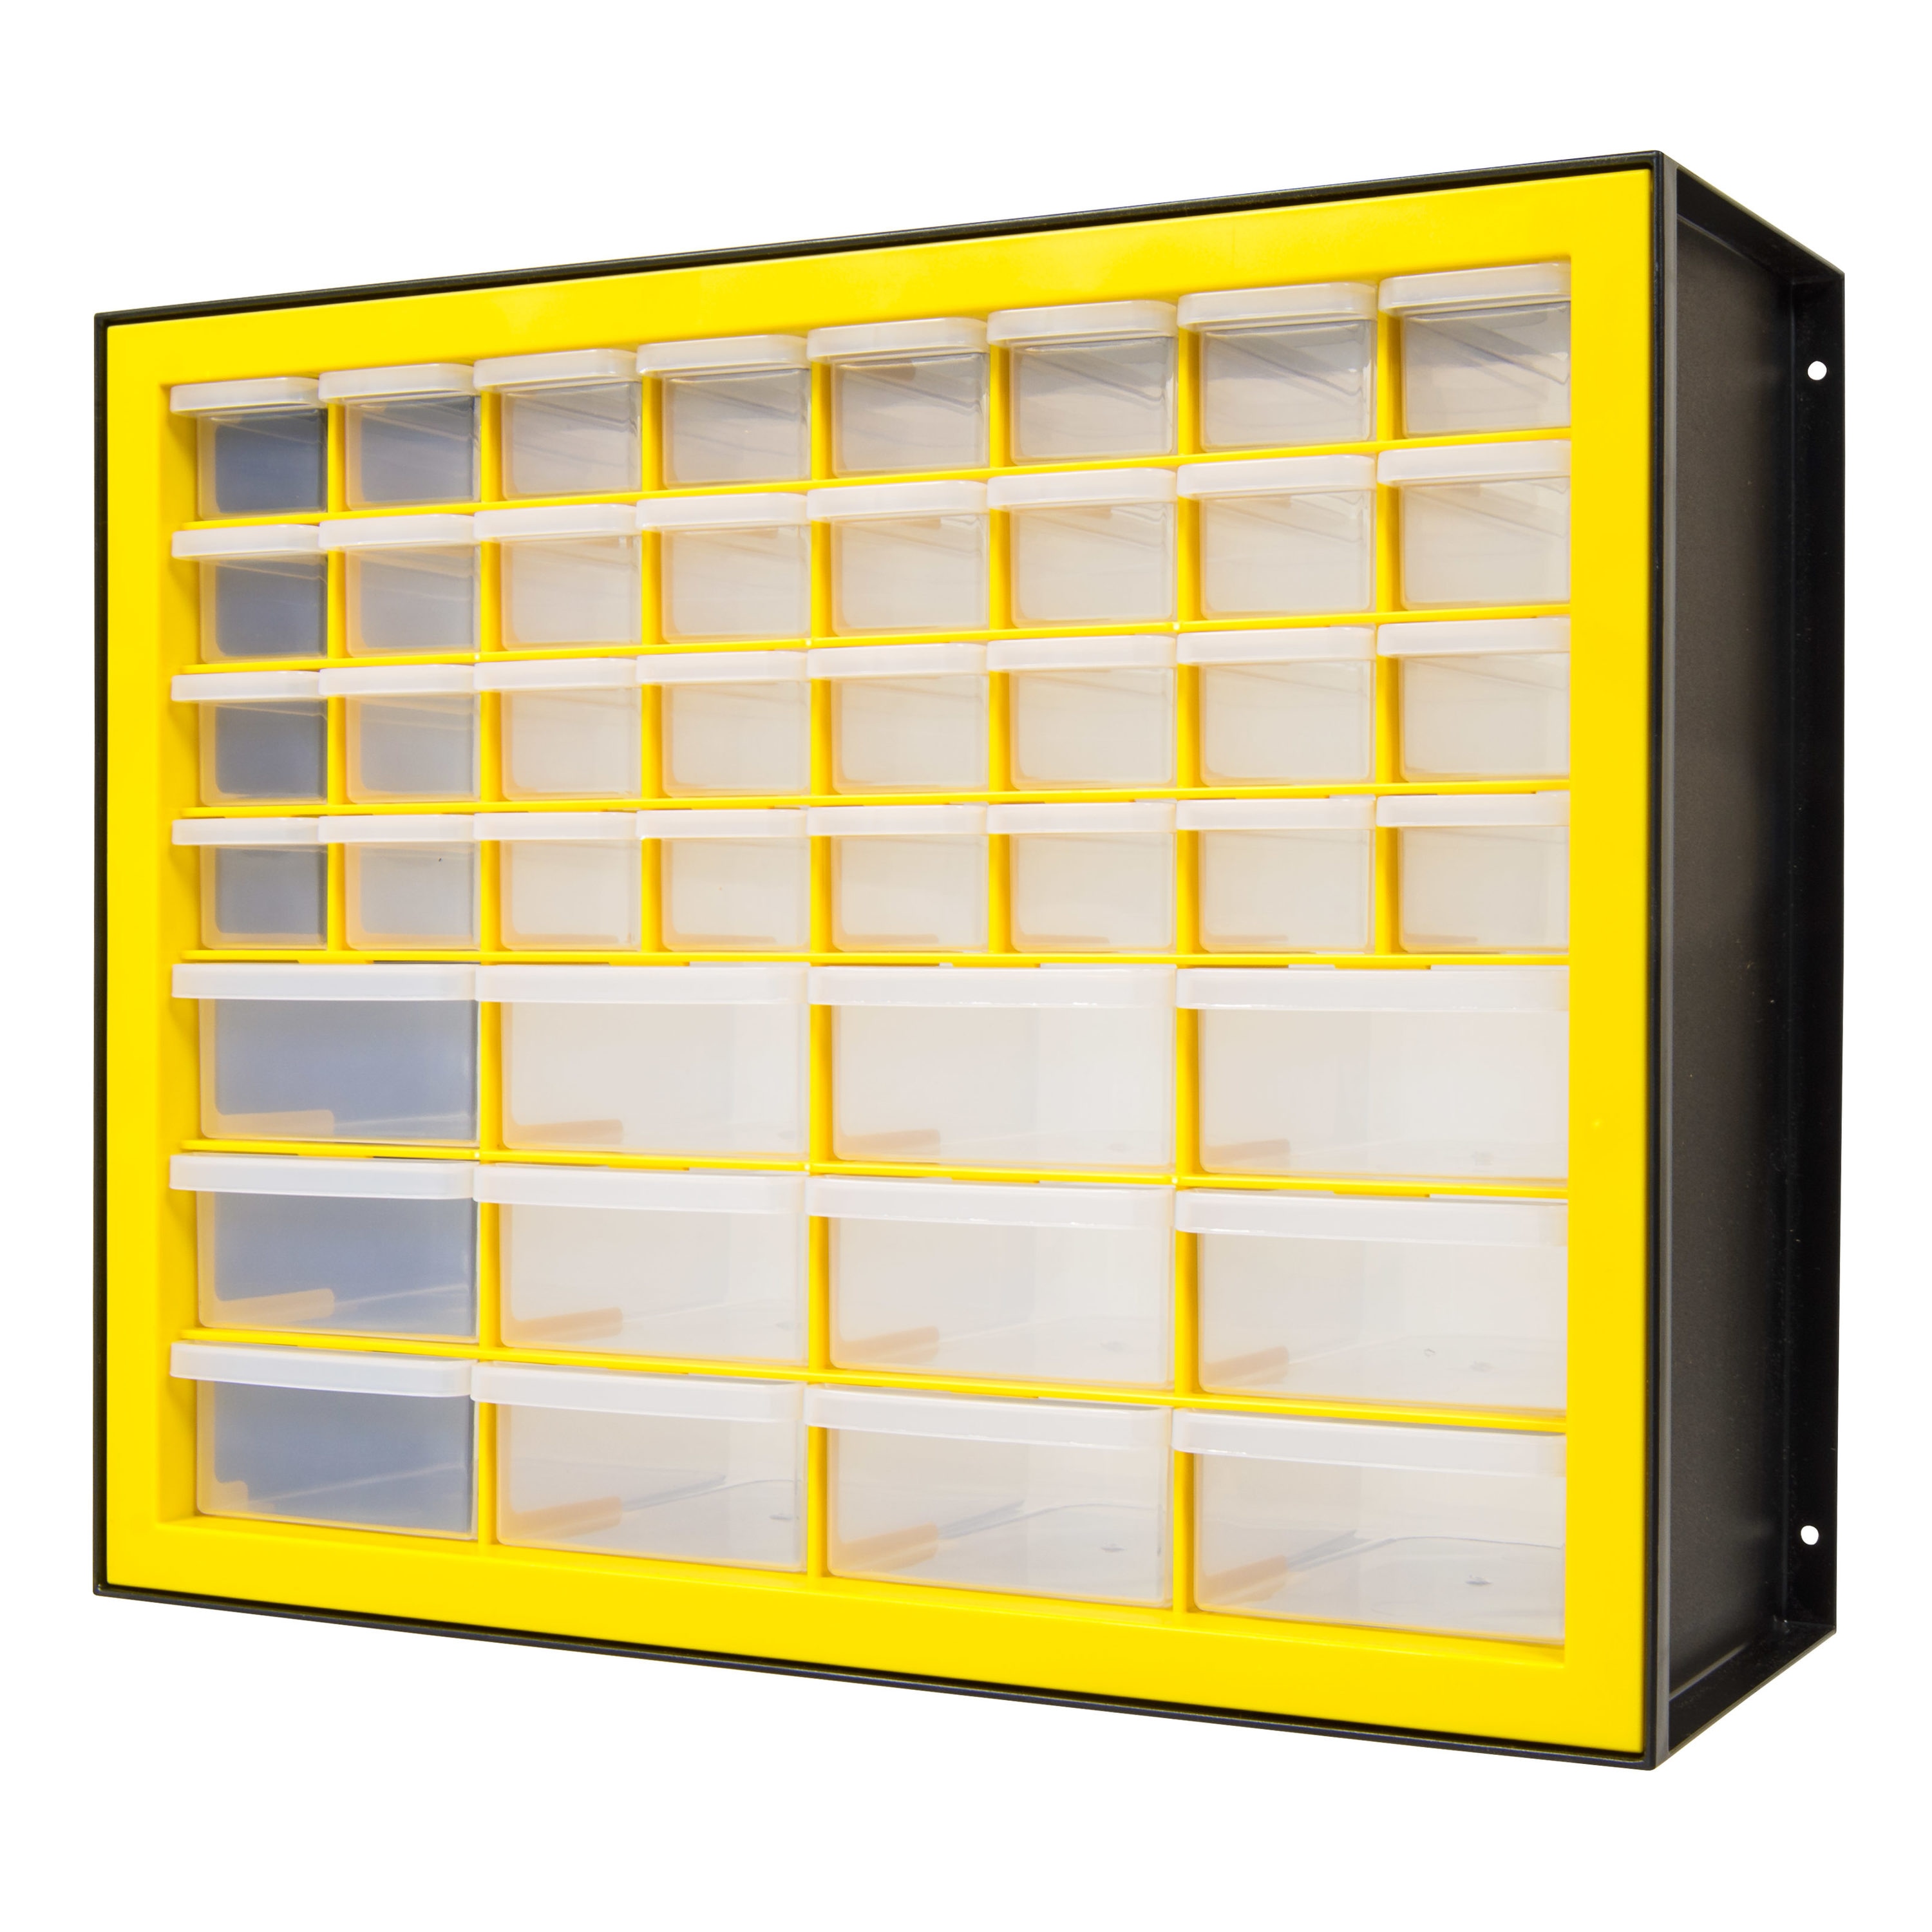 CRAFTSMAN Storage Organizer Bin System, 9 Compartment, Plastic (CMST40709)  (Pack of 2)